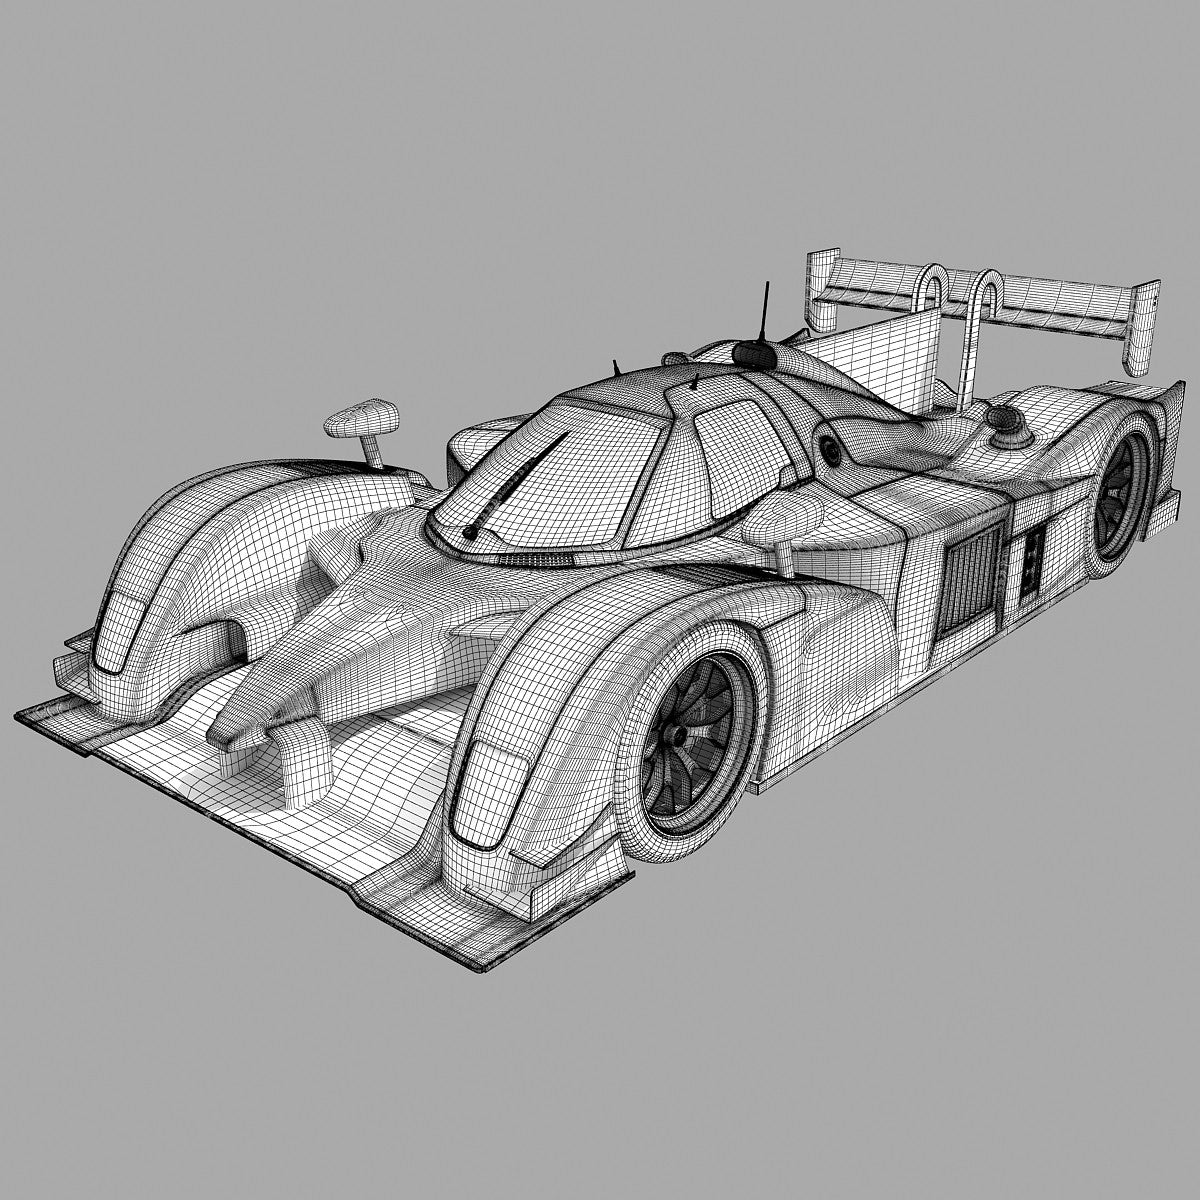 3D Racecar Model